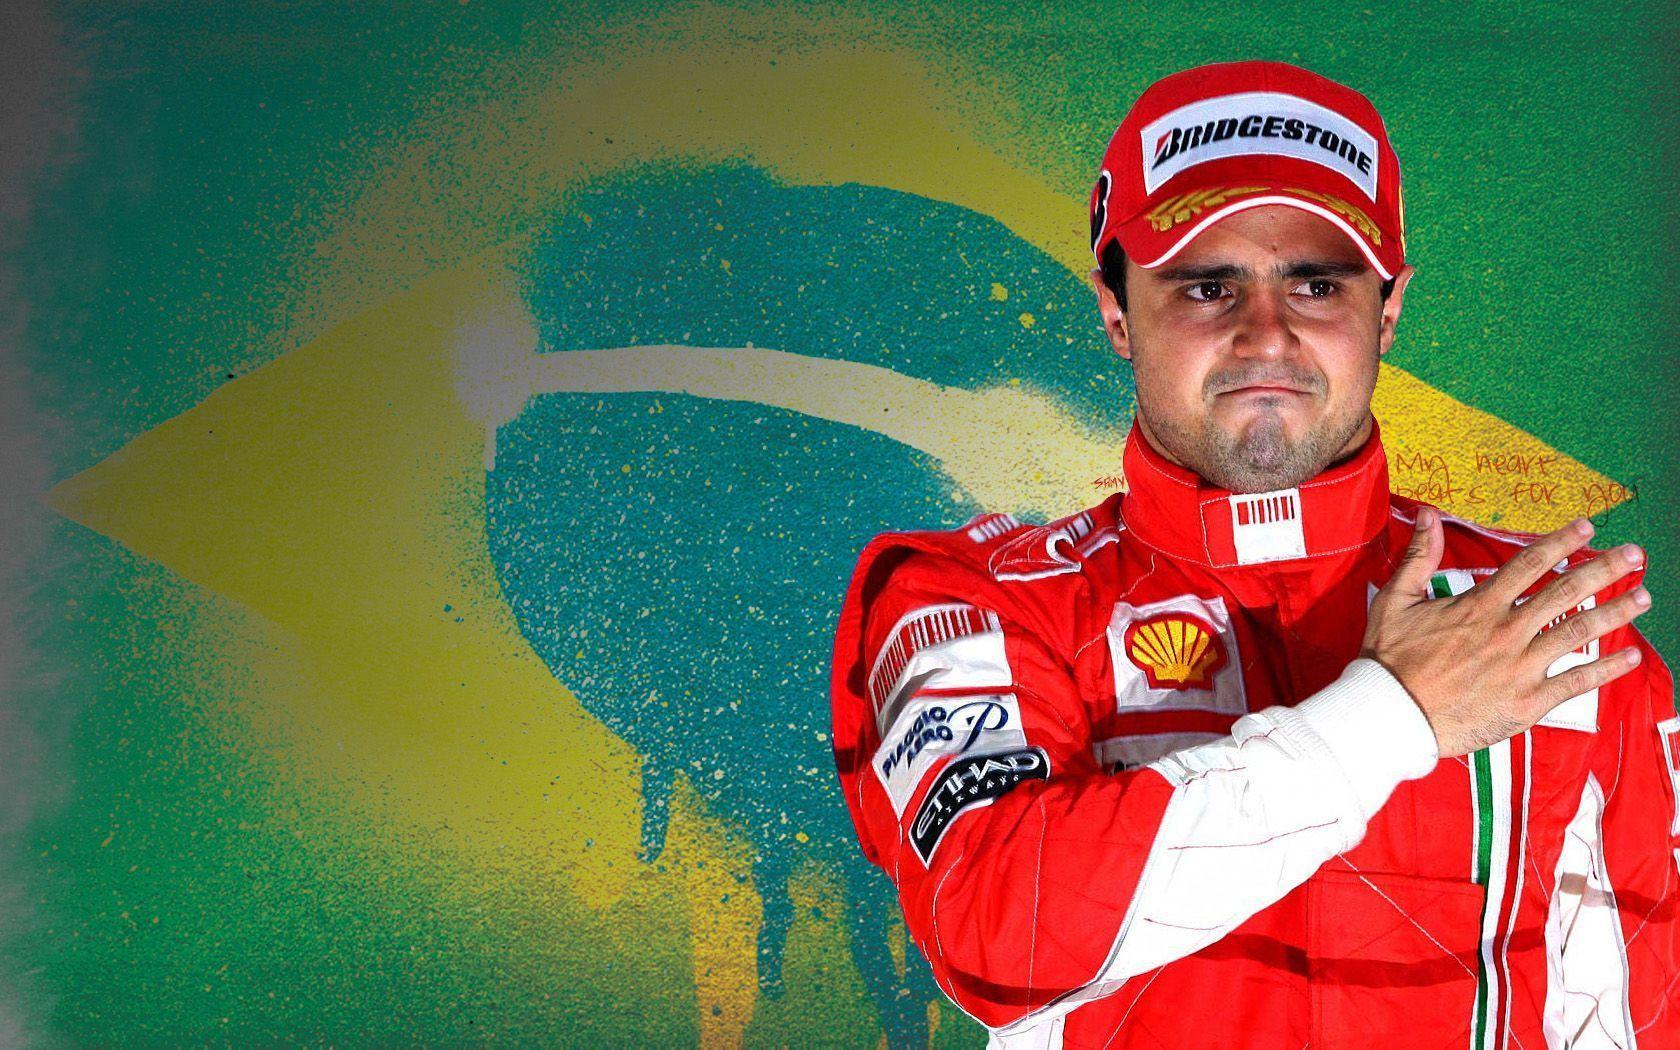 Fonds d&;écran Felipe Massa, tous les wallpaper Felipe Massa